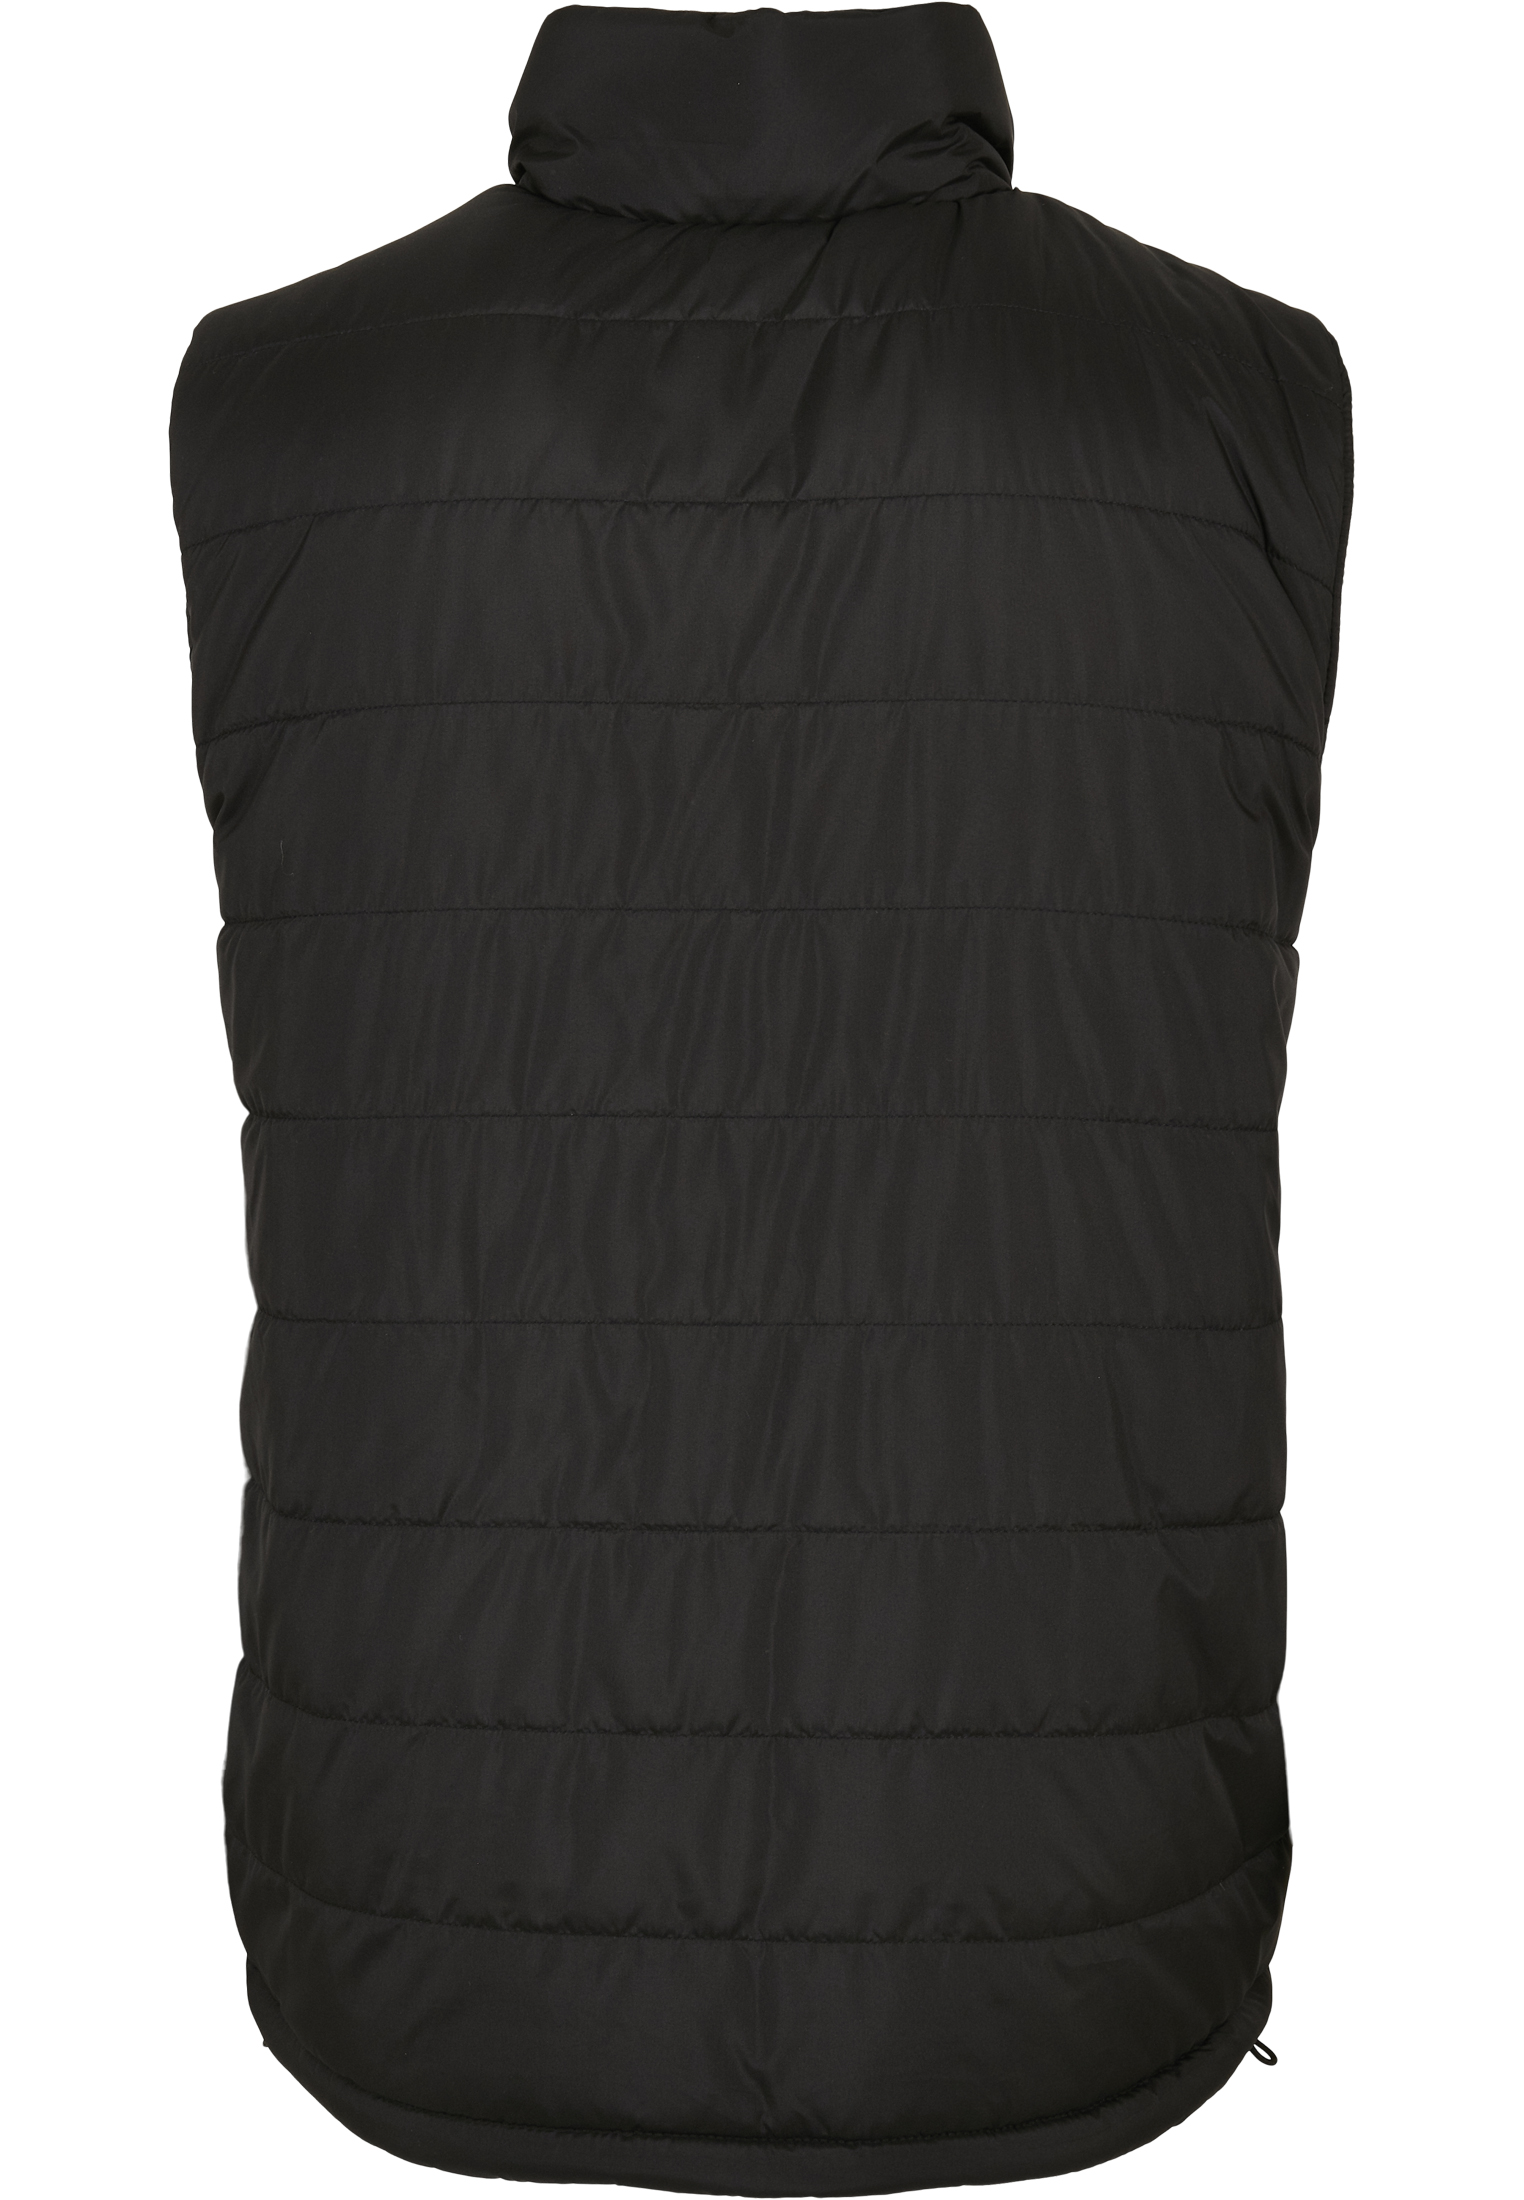 Saisonware Southpole Reversible Bubble Vest in Farbe black